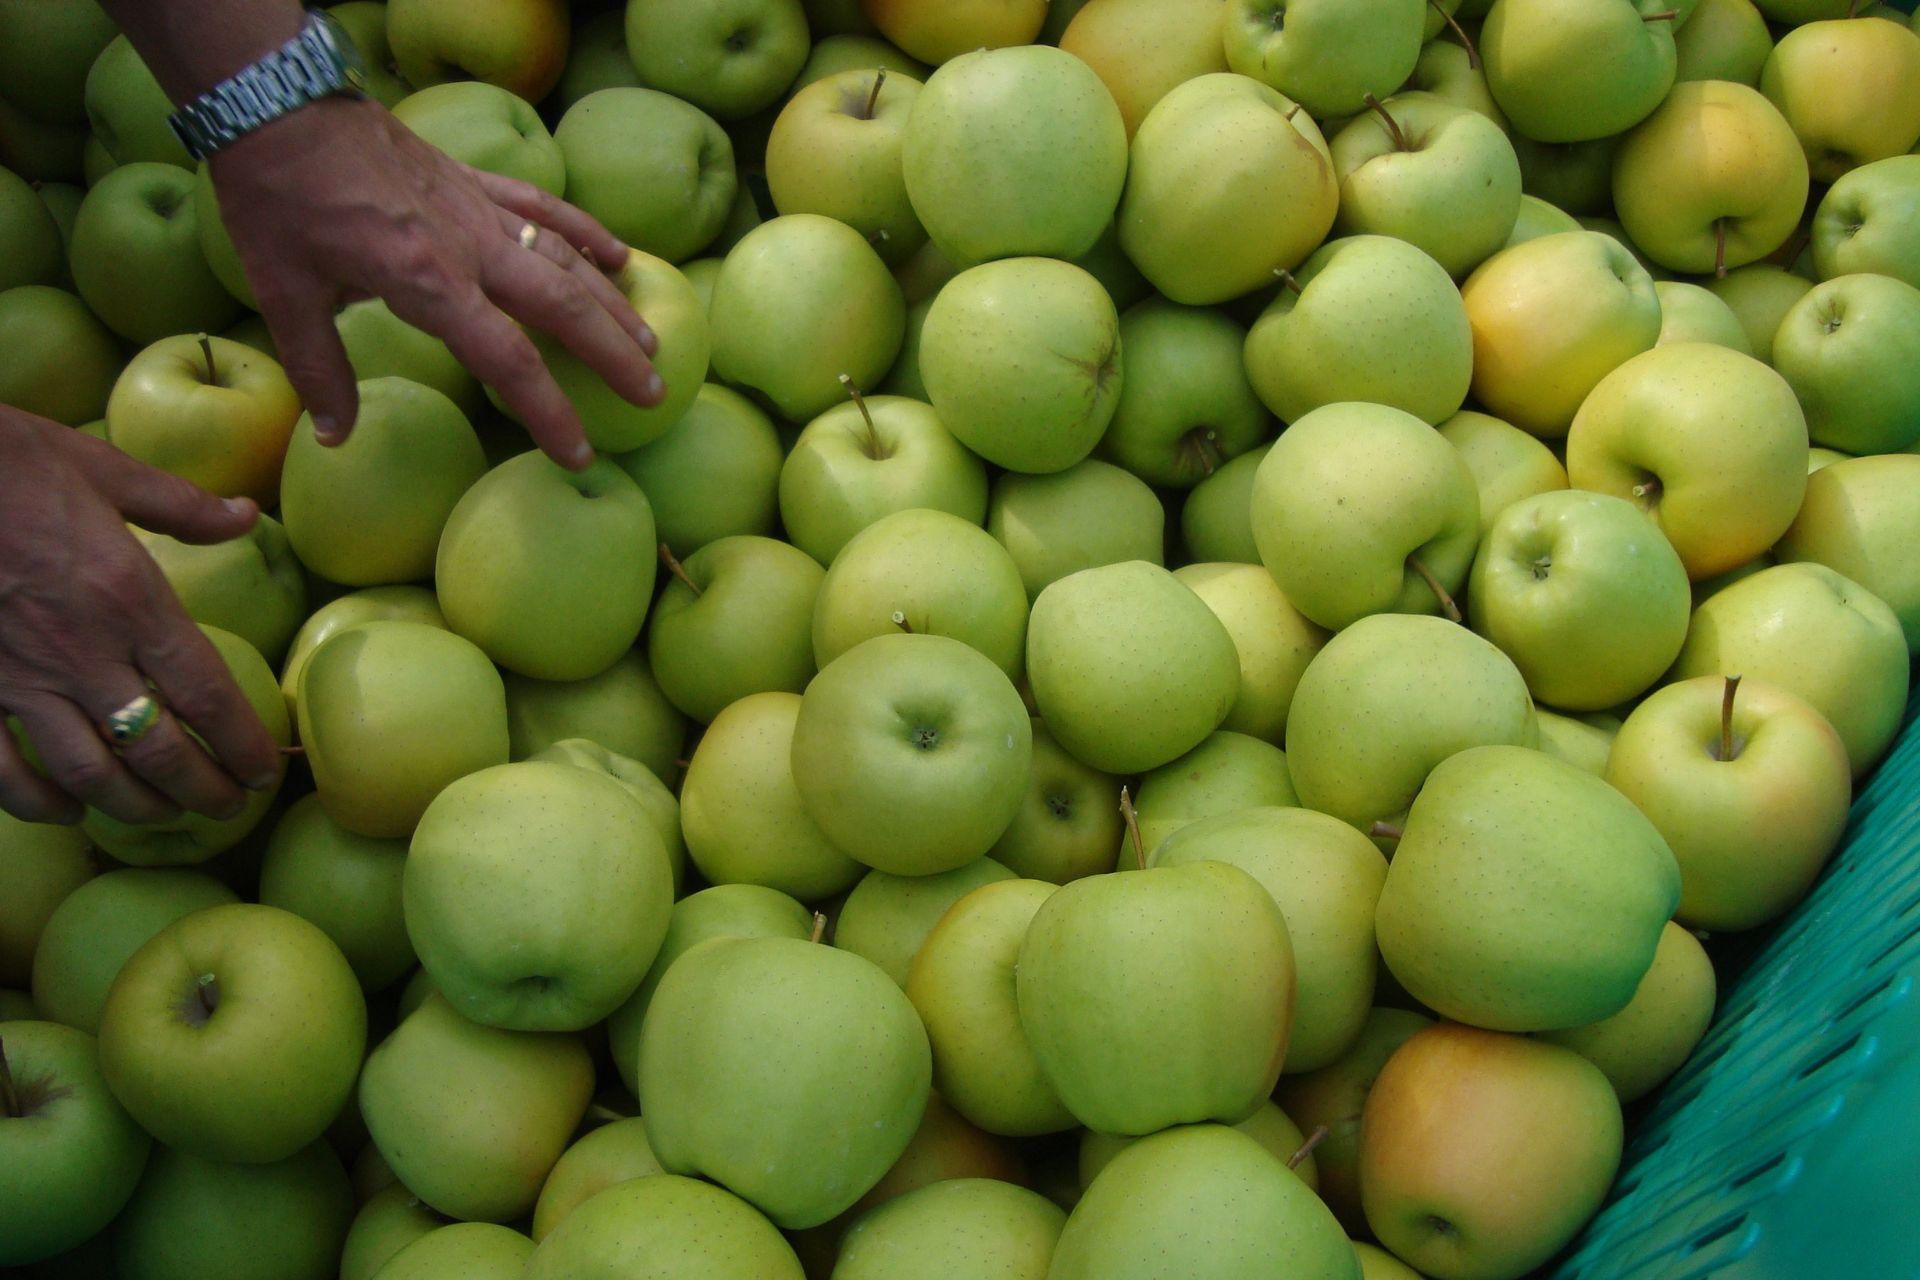 apples-grown-with-BioAksxter-mele-coltivate-con-bioaksxter.jpg